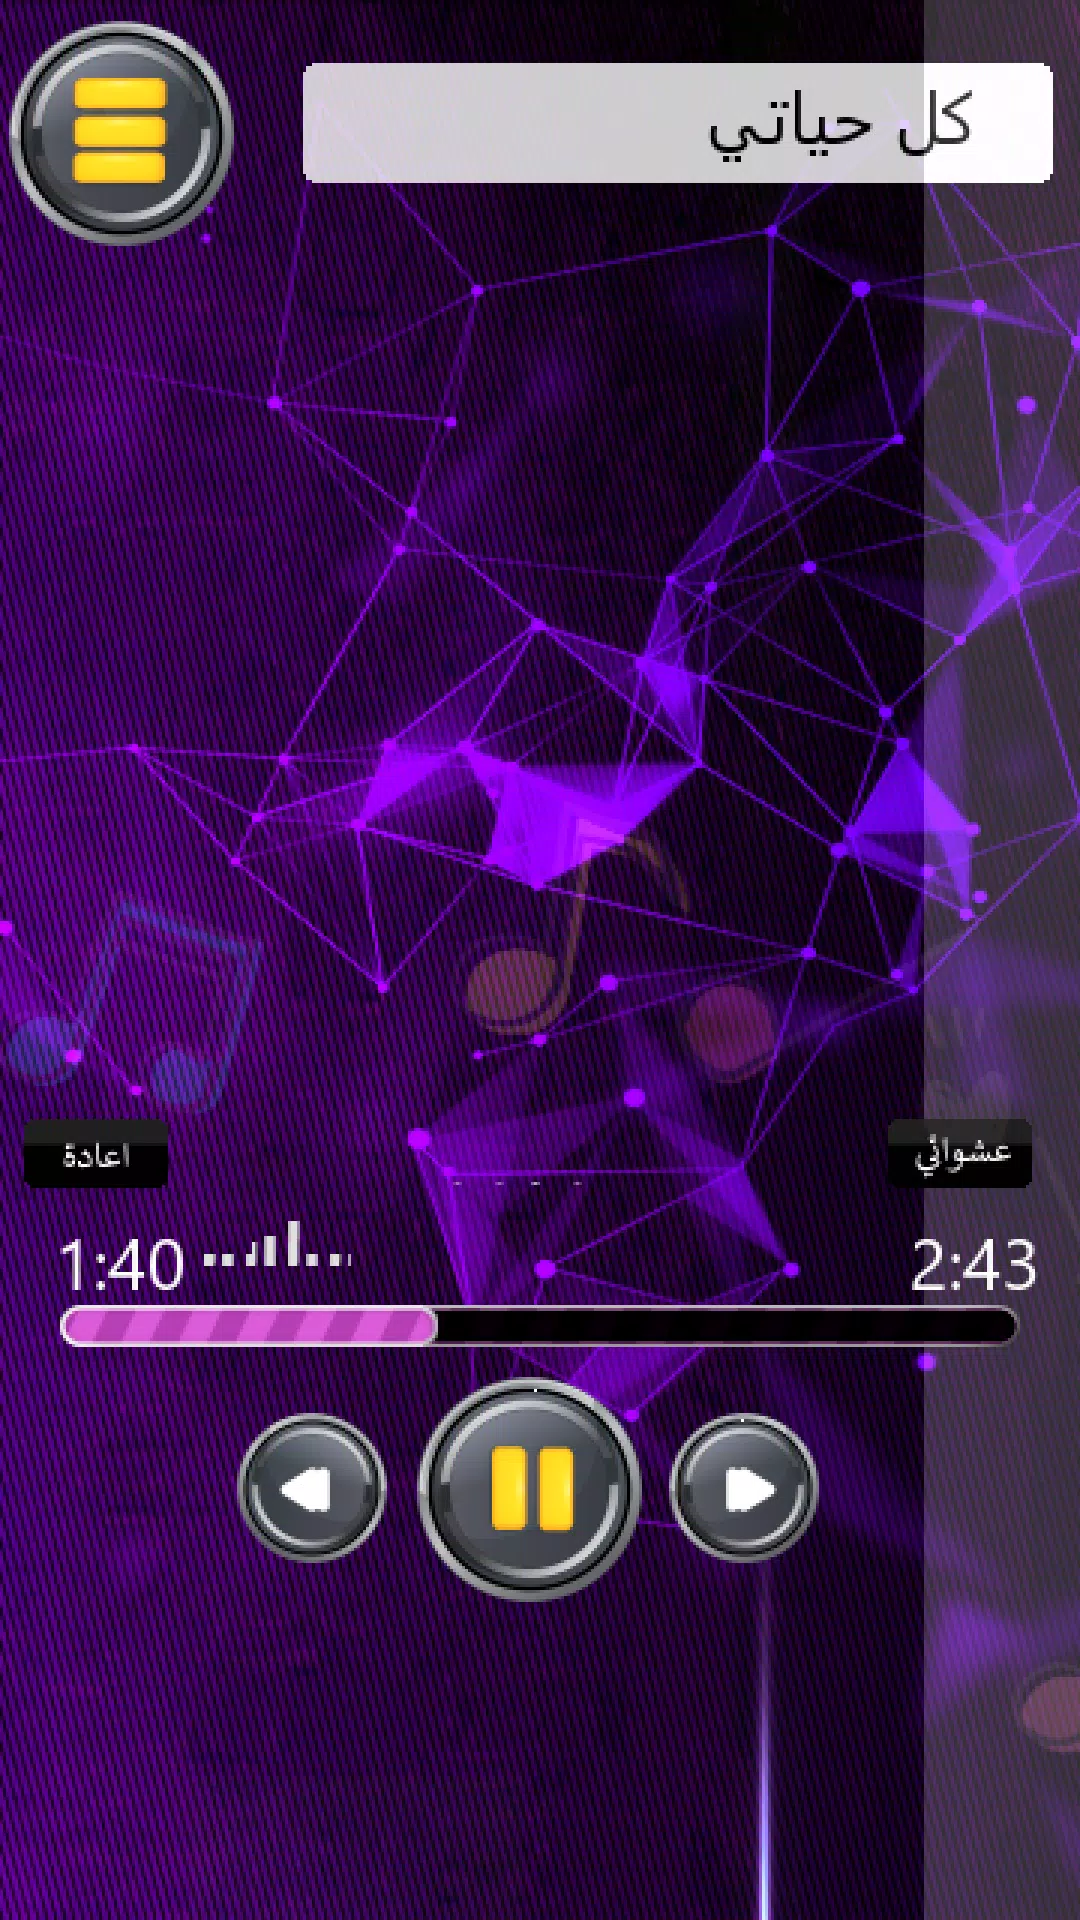 البوم كل حياتي عمرو دياب APK for Android Download